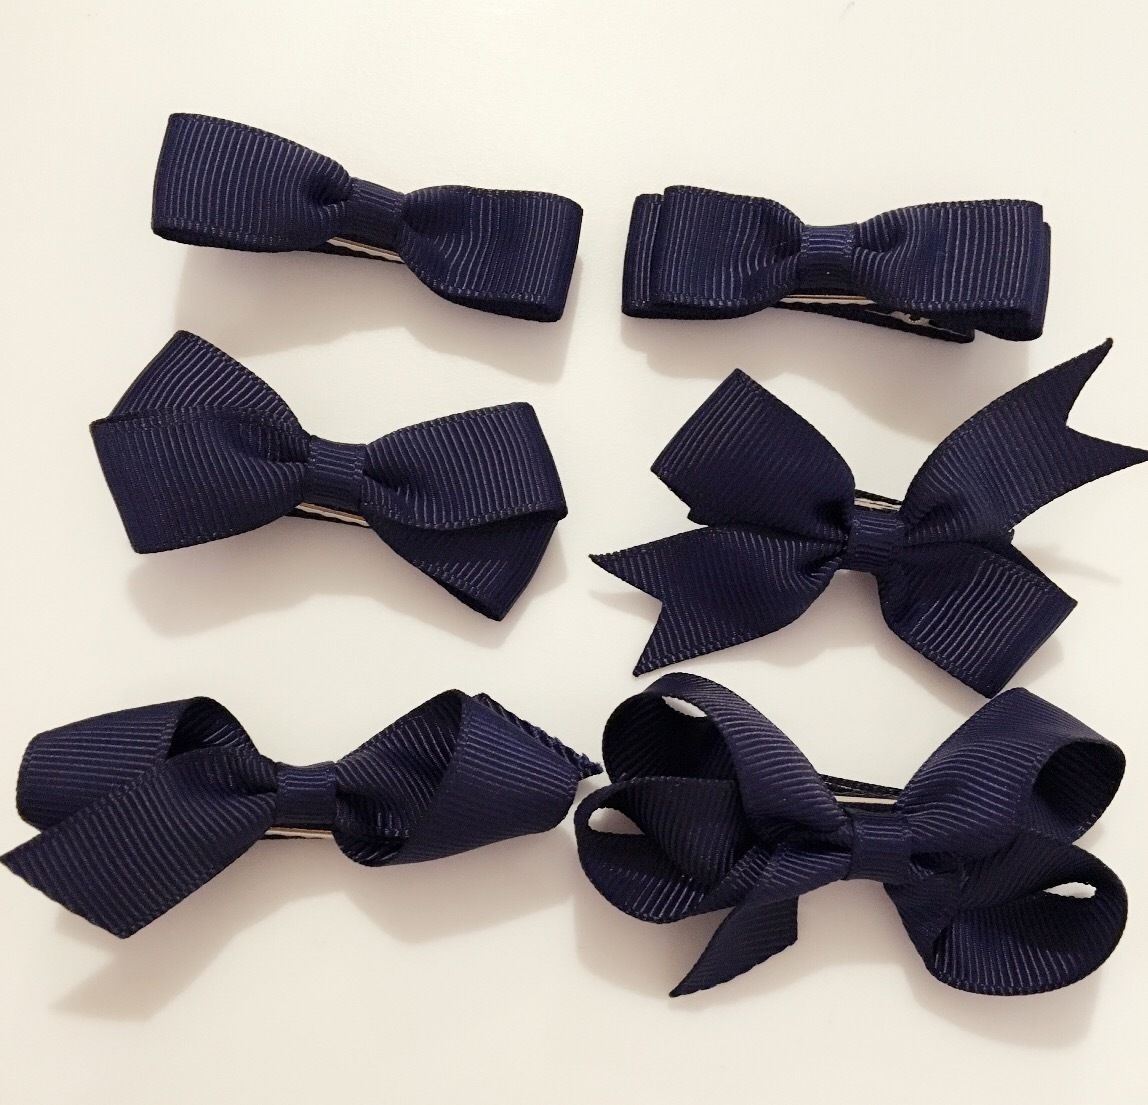 6 PIECE SET Girls Small Hair Bows Clips Grosgrain Ribbon School Uniform Colours[Navy Blue]